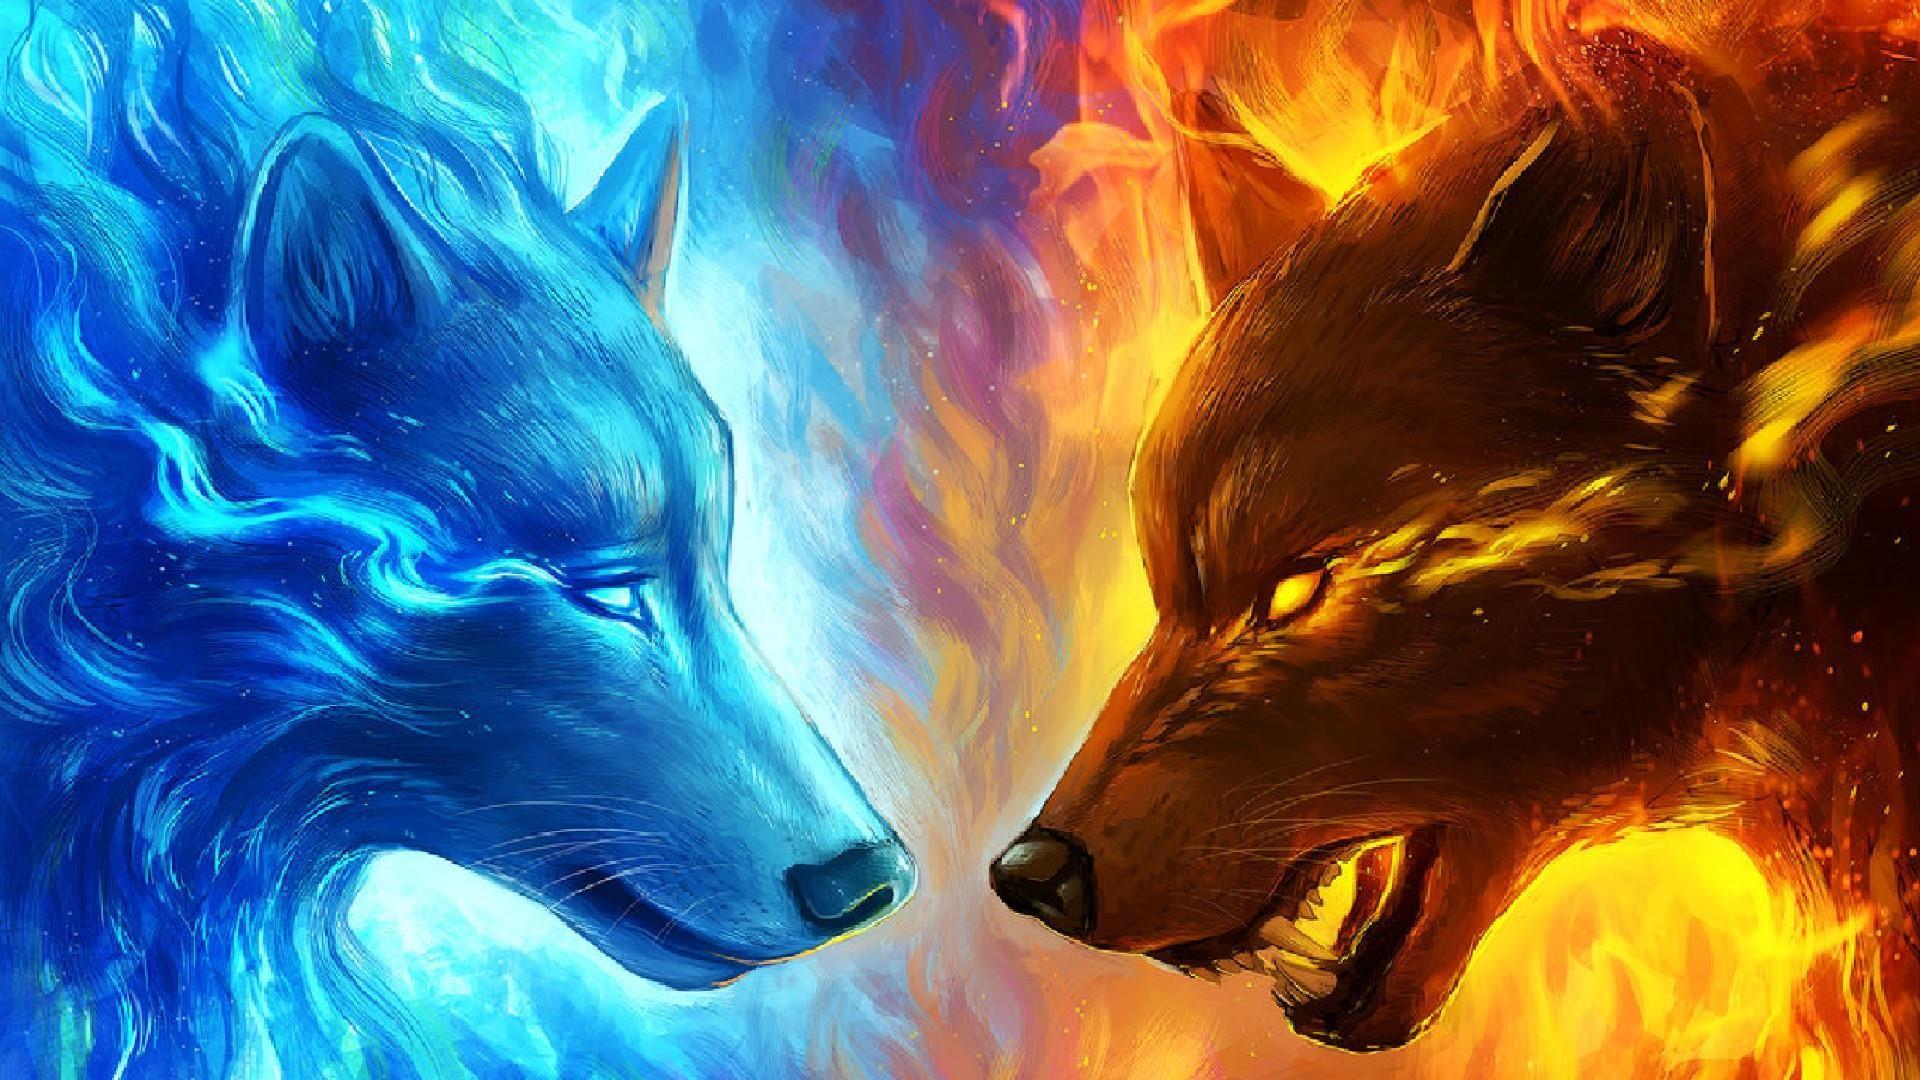 Water and Fire Wolf Wallpapers - Top Những Hình Ảnh Đẹp